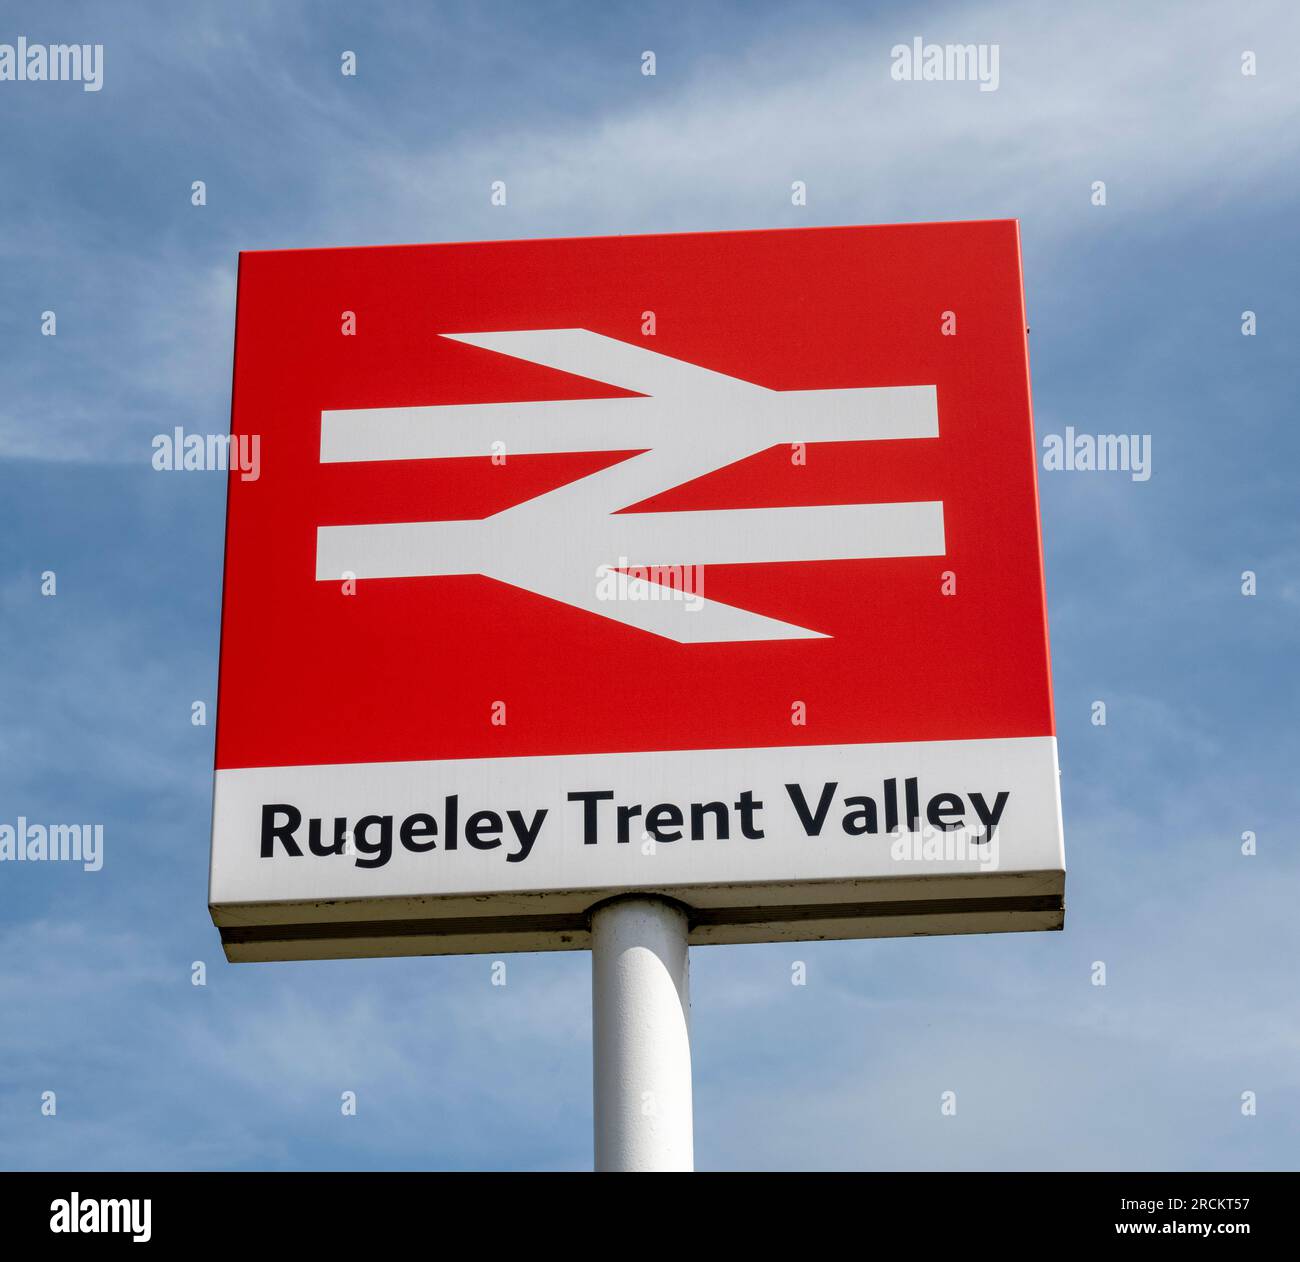 British Rail Rugeley Trent Valley railway station sign, Rugeley, Staffordshire, England, UK. Stock Photo